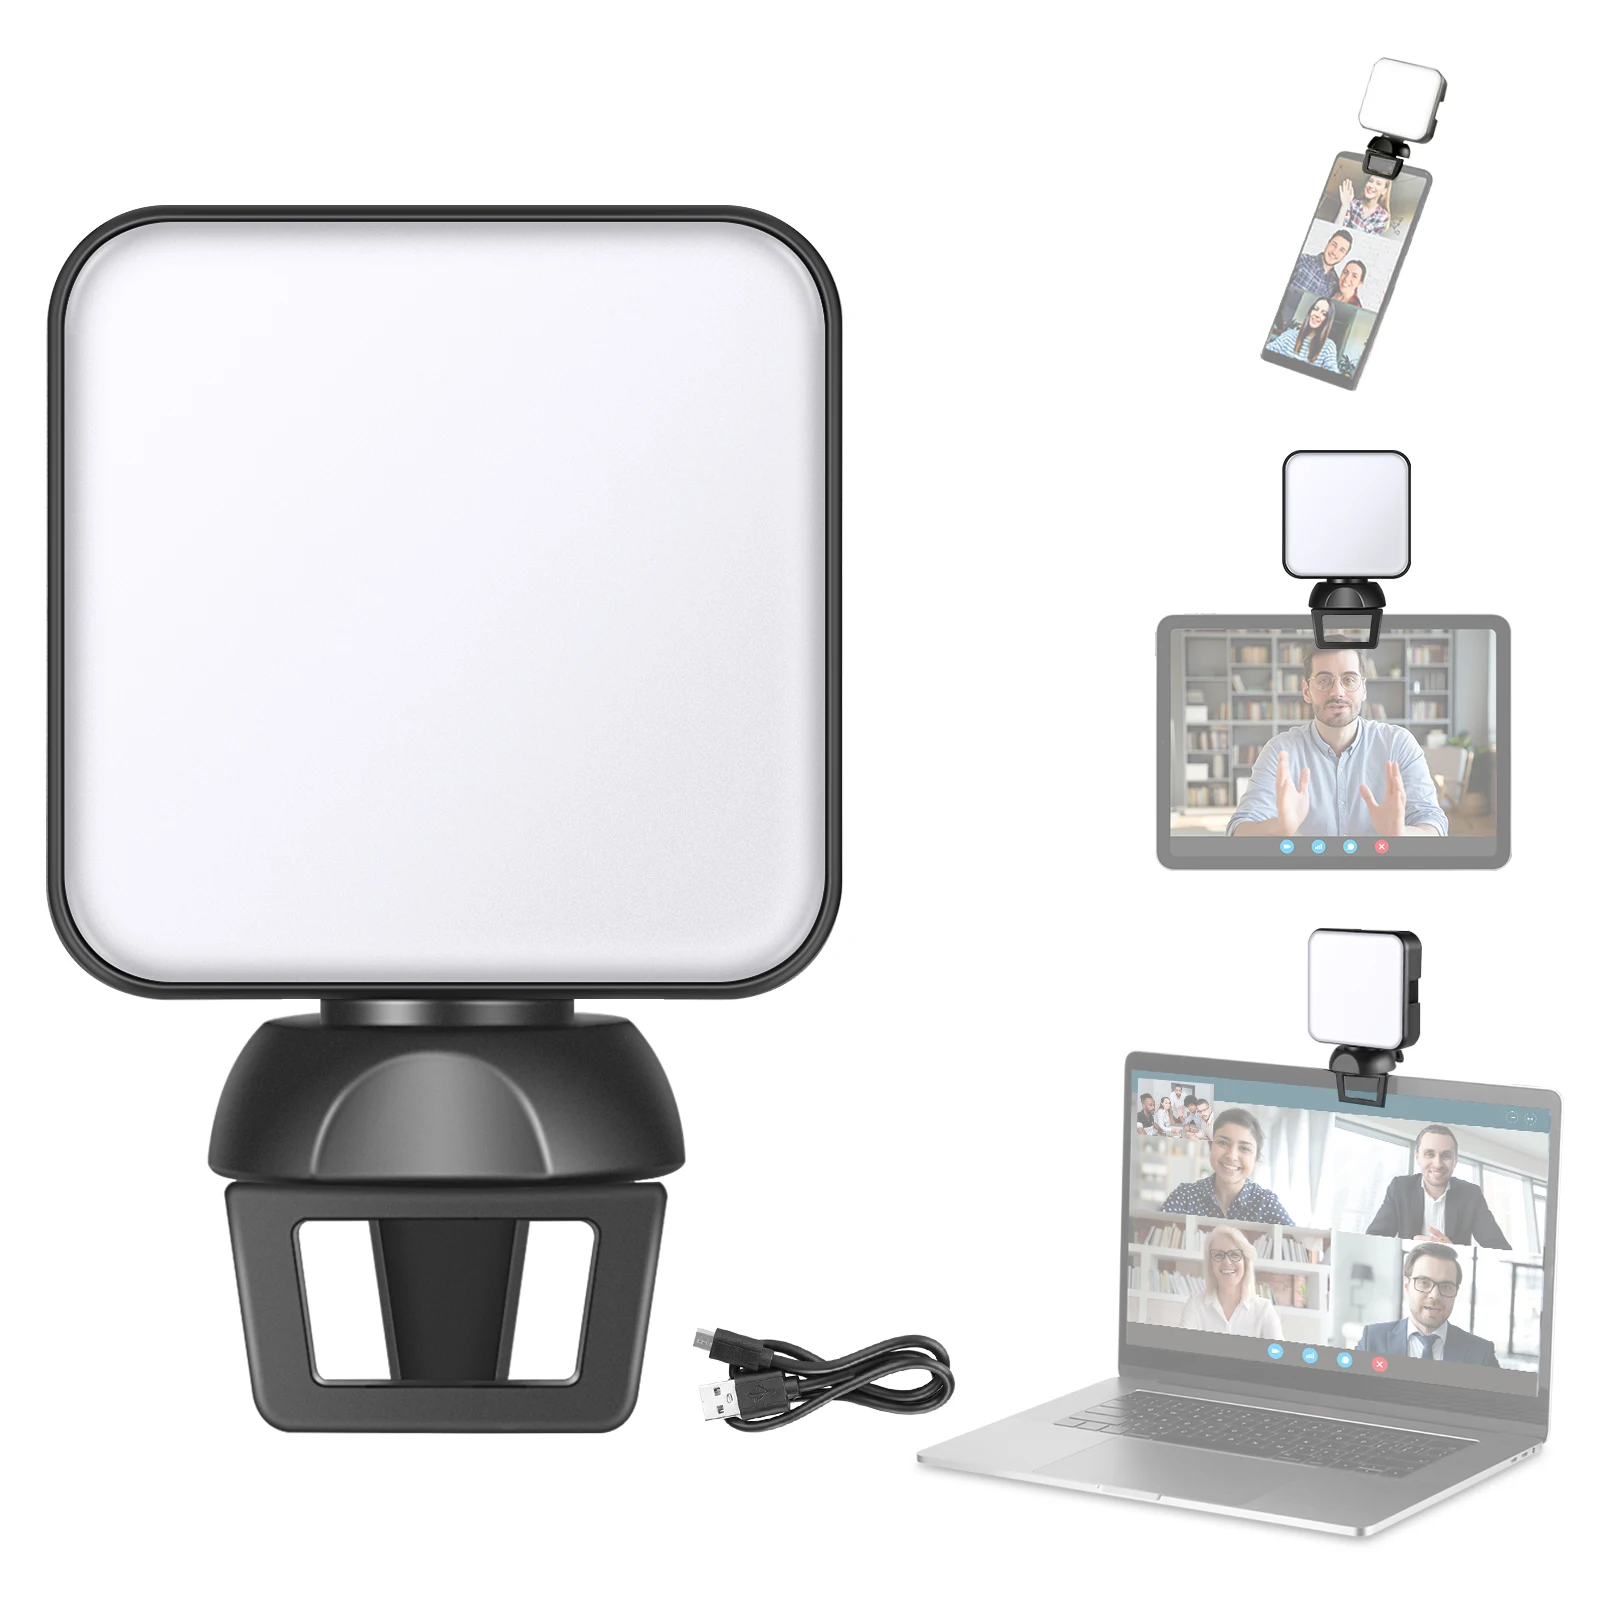 

Neewer видео конференц-светильник ing Kit, Zoom светильник ing для ноутбука, мини USB светильник для видеоконференций/удаленная работа/зум-звонки